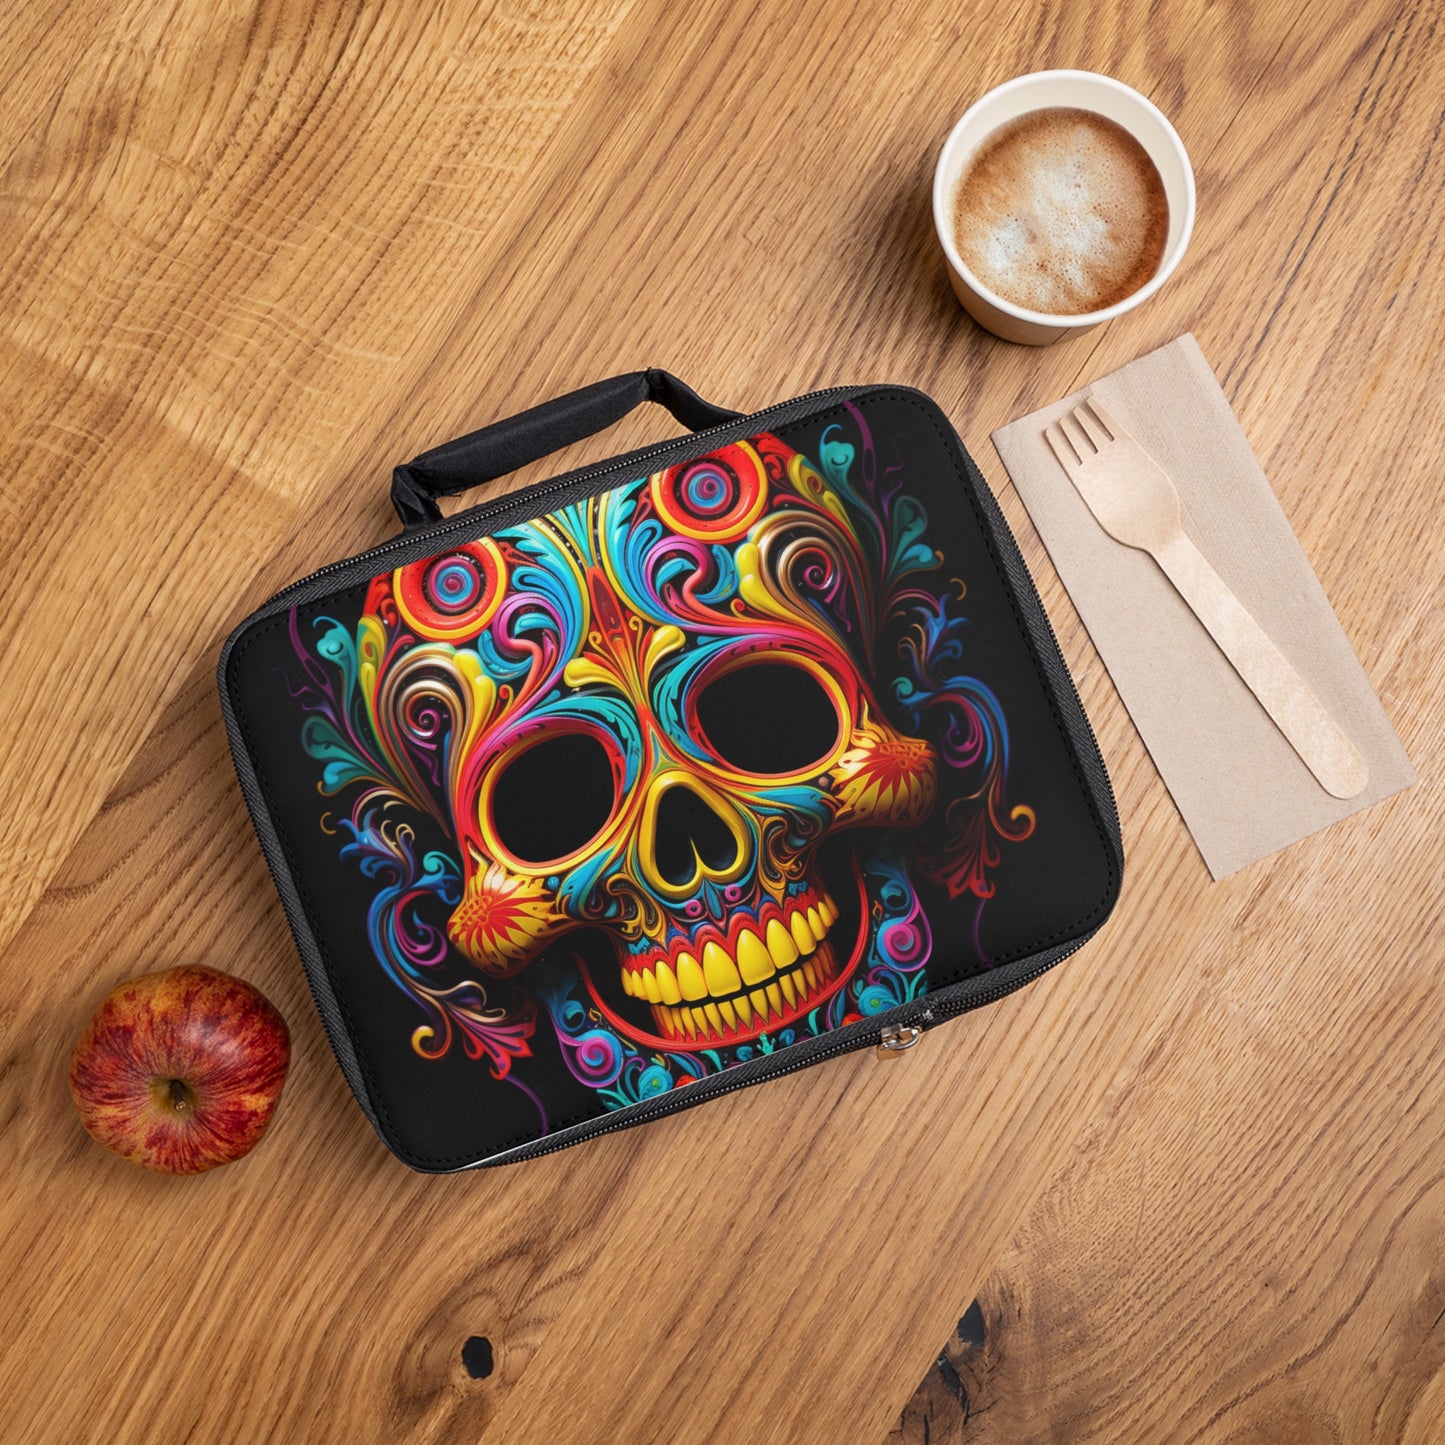 Lunch Bag Macro Skull Color 1